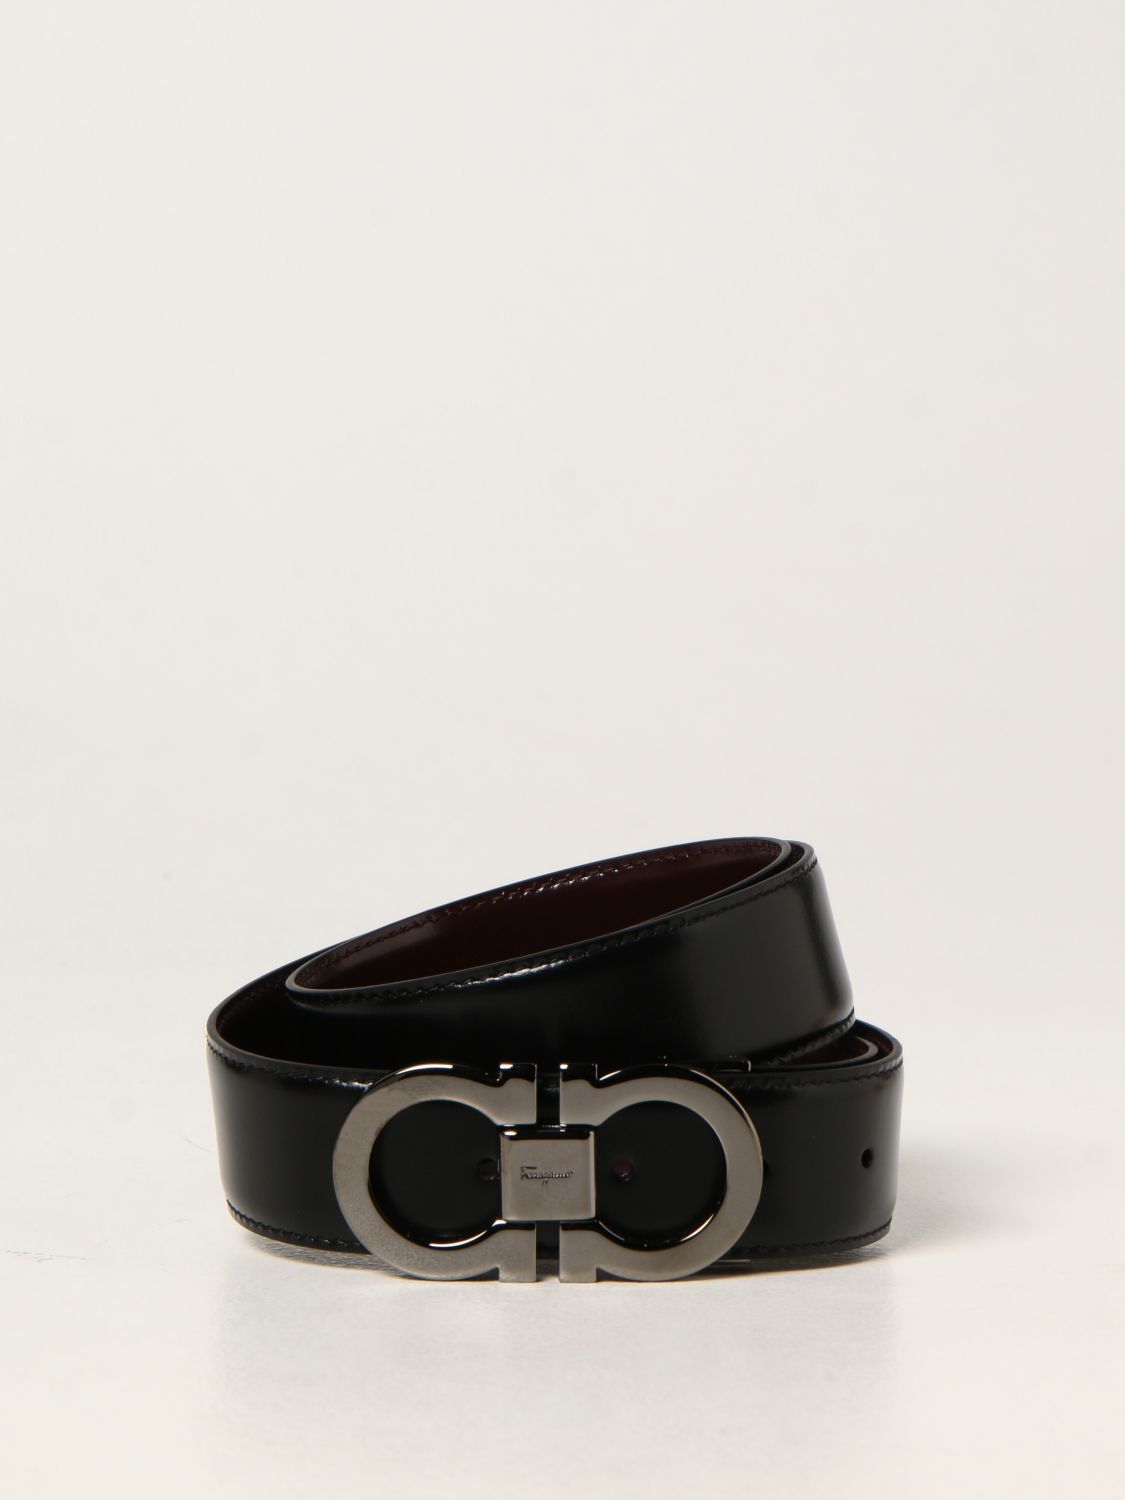 Leather belt Salvatore Ferragamo Black size 35 Inches in Leather - 15785468